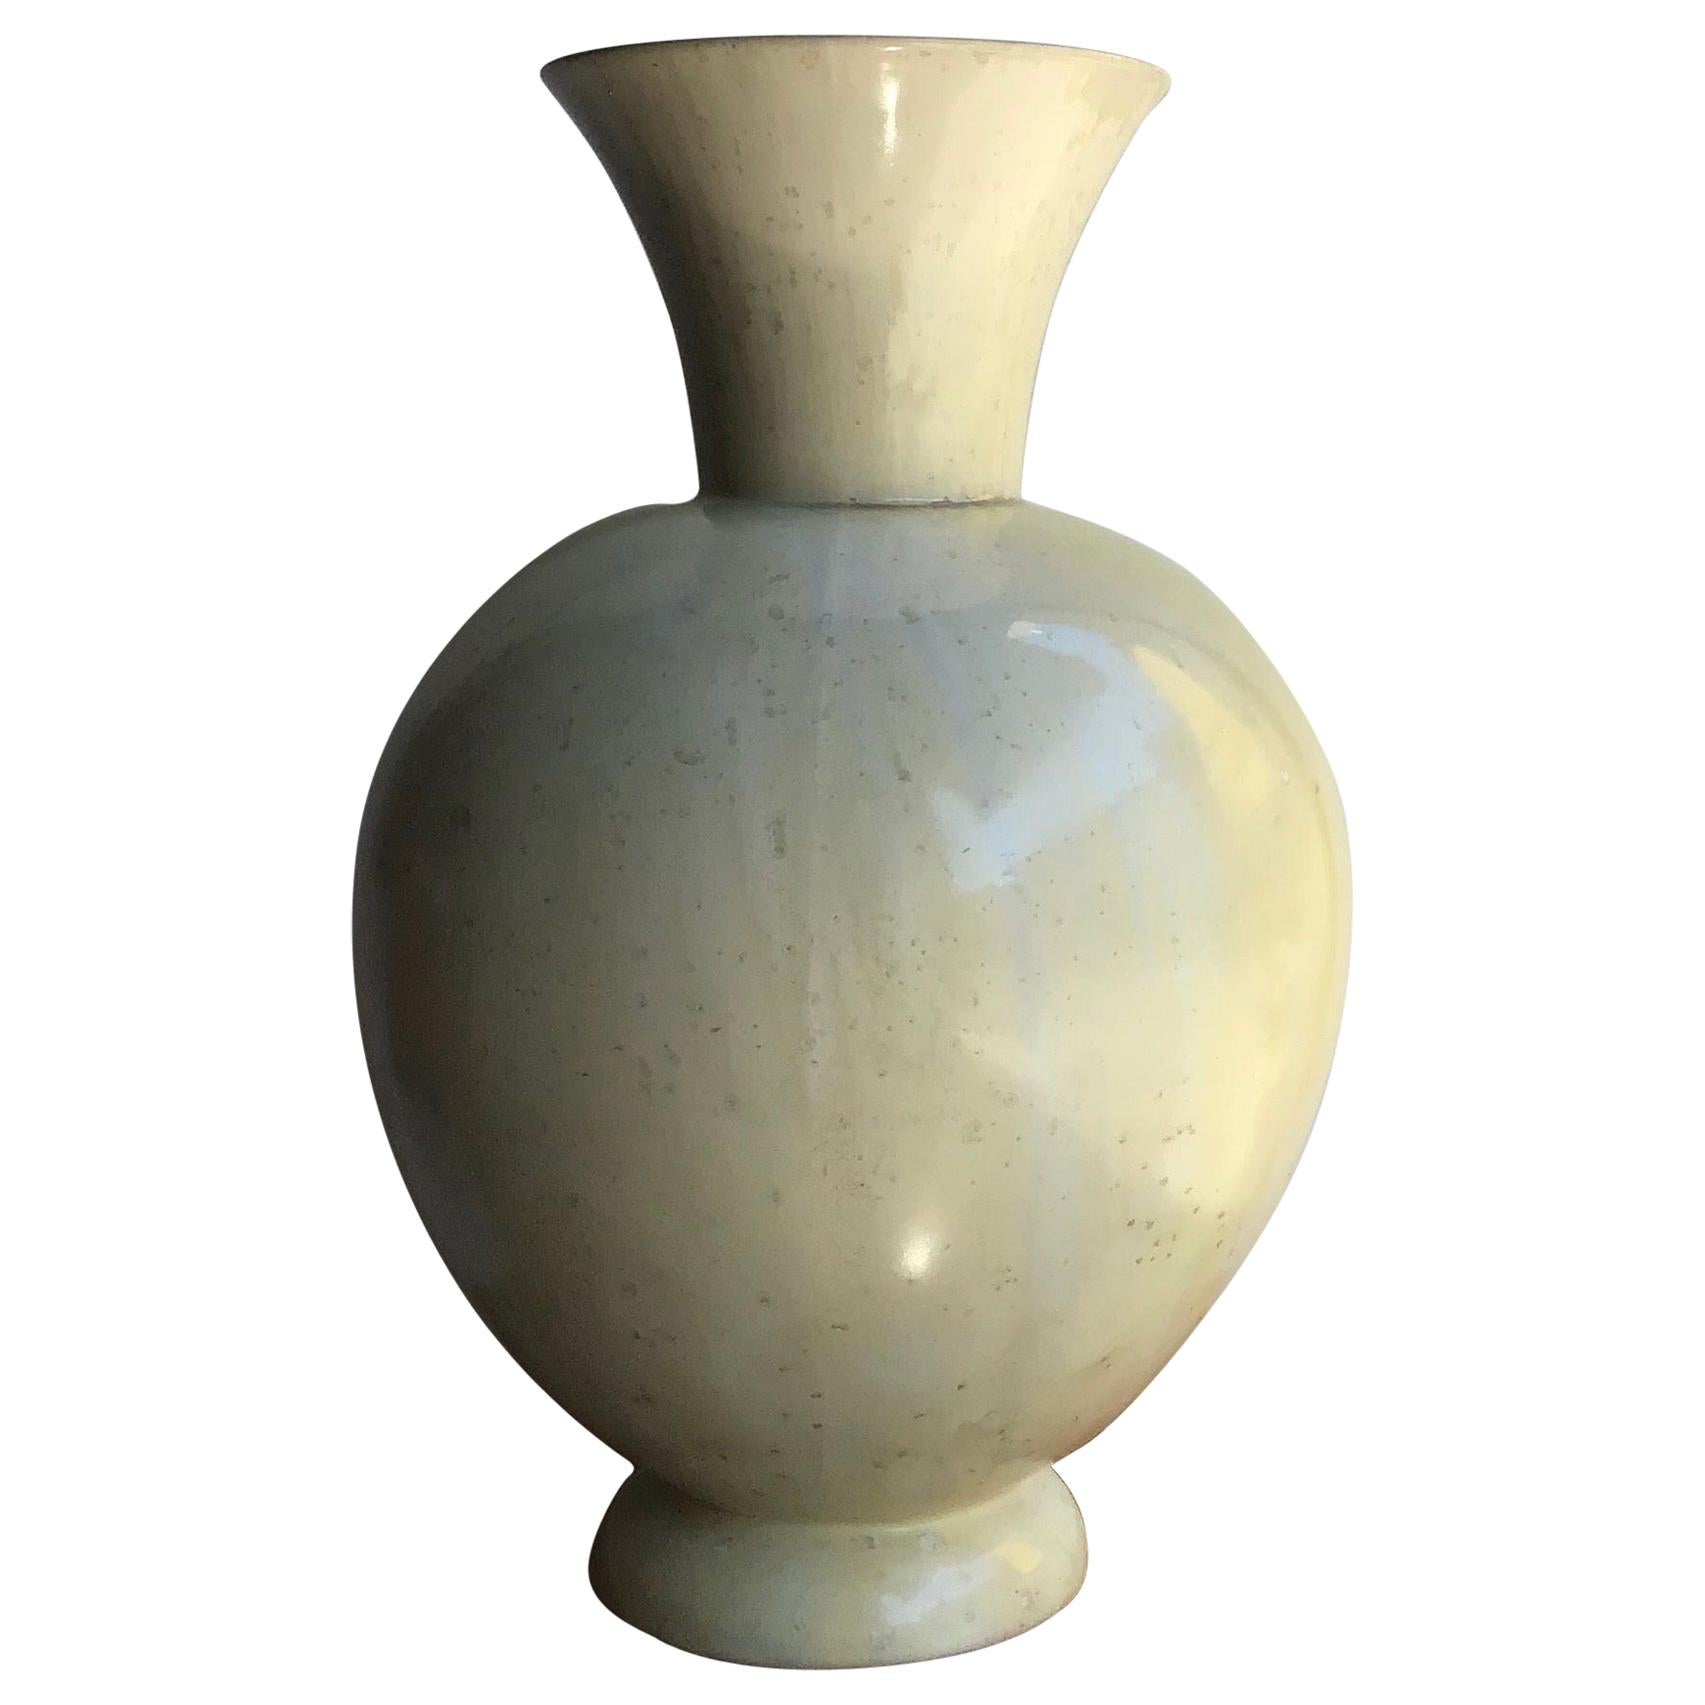 S.C.I. Laveno Vase “Guido Andlovitz “Ceramic, 1930, Italy